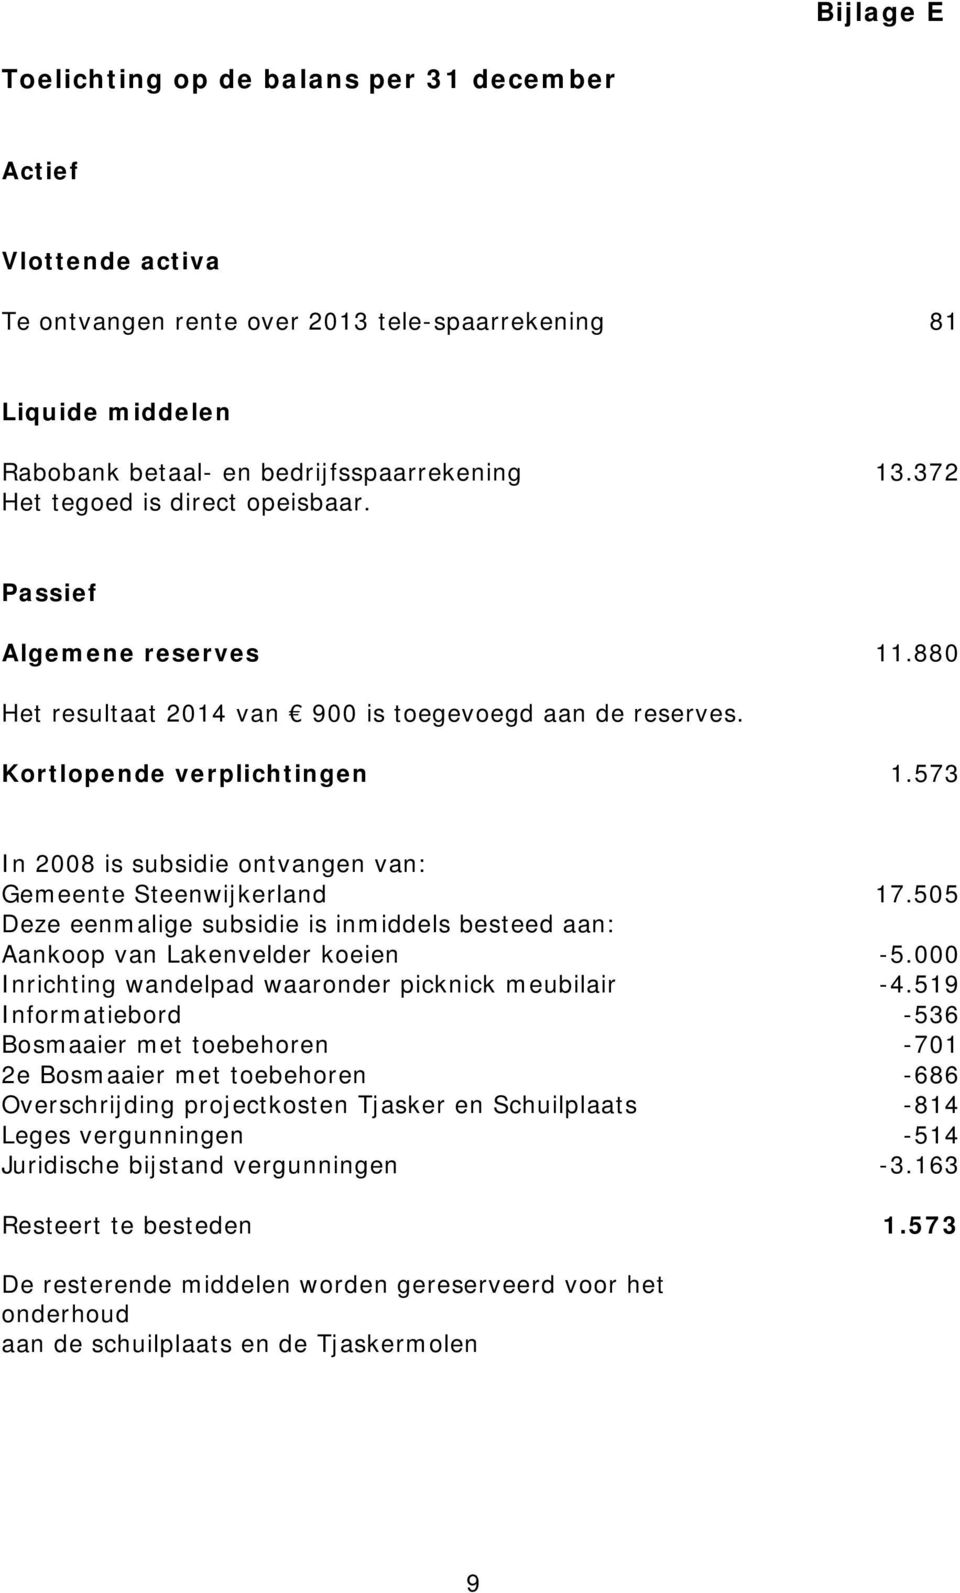 573 In 2008 is subsidie ontvangen van: Gemeente Steenwijkerland 17.505 Deze eenmalige subsidie is inmiddels besteed aan: Aankoop van Lakenvelder koeien -5.